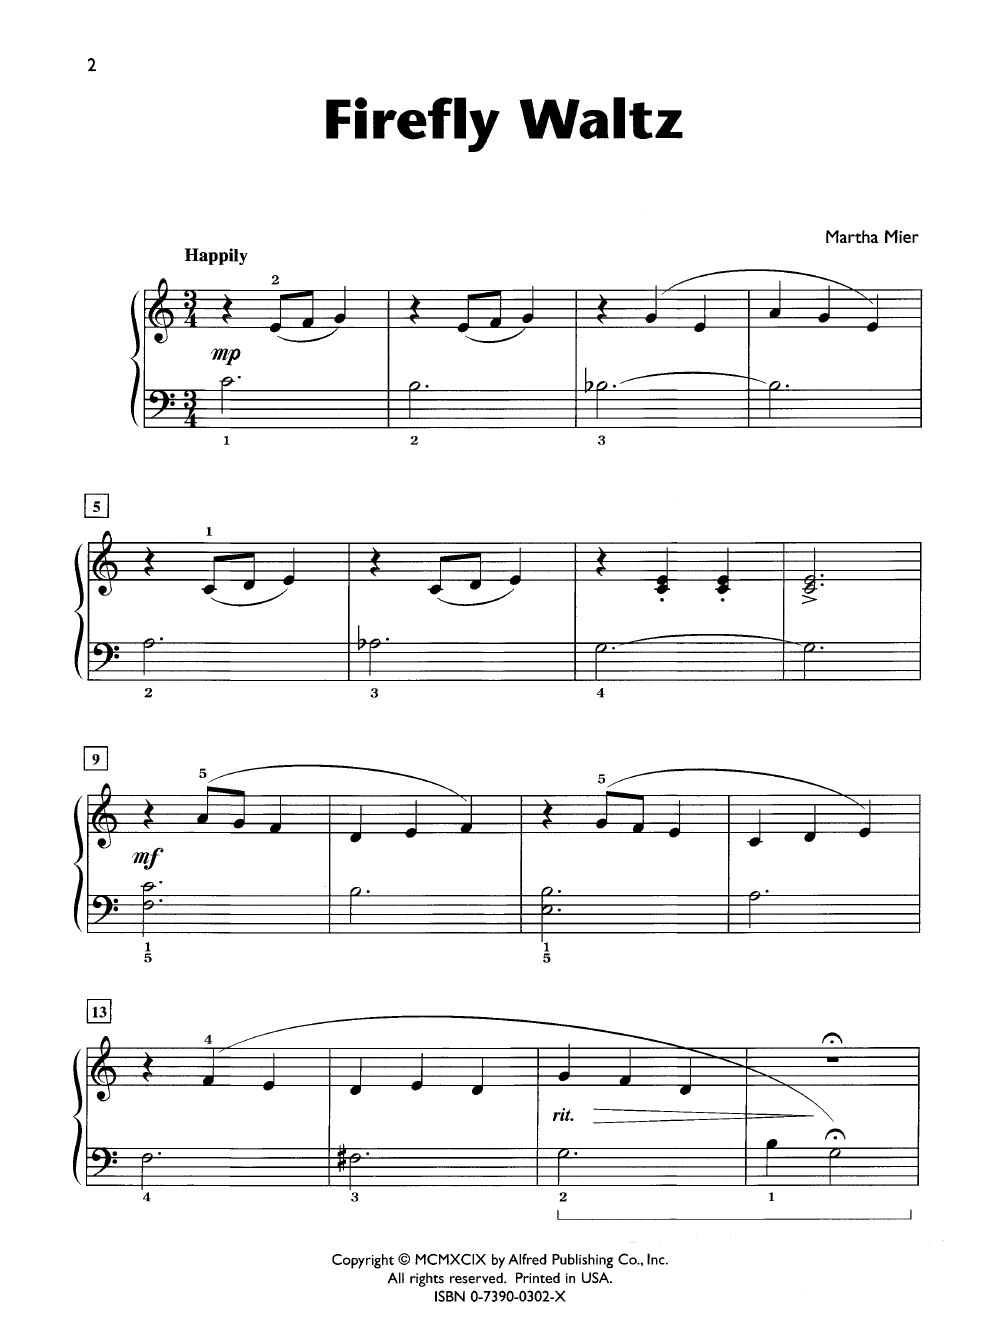 Firefly Waltz-Late Elementary Piano by MIER, M| J.W. Pepper Sheet Music